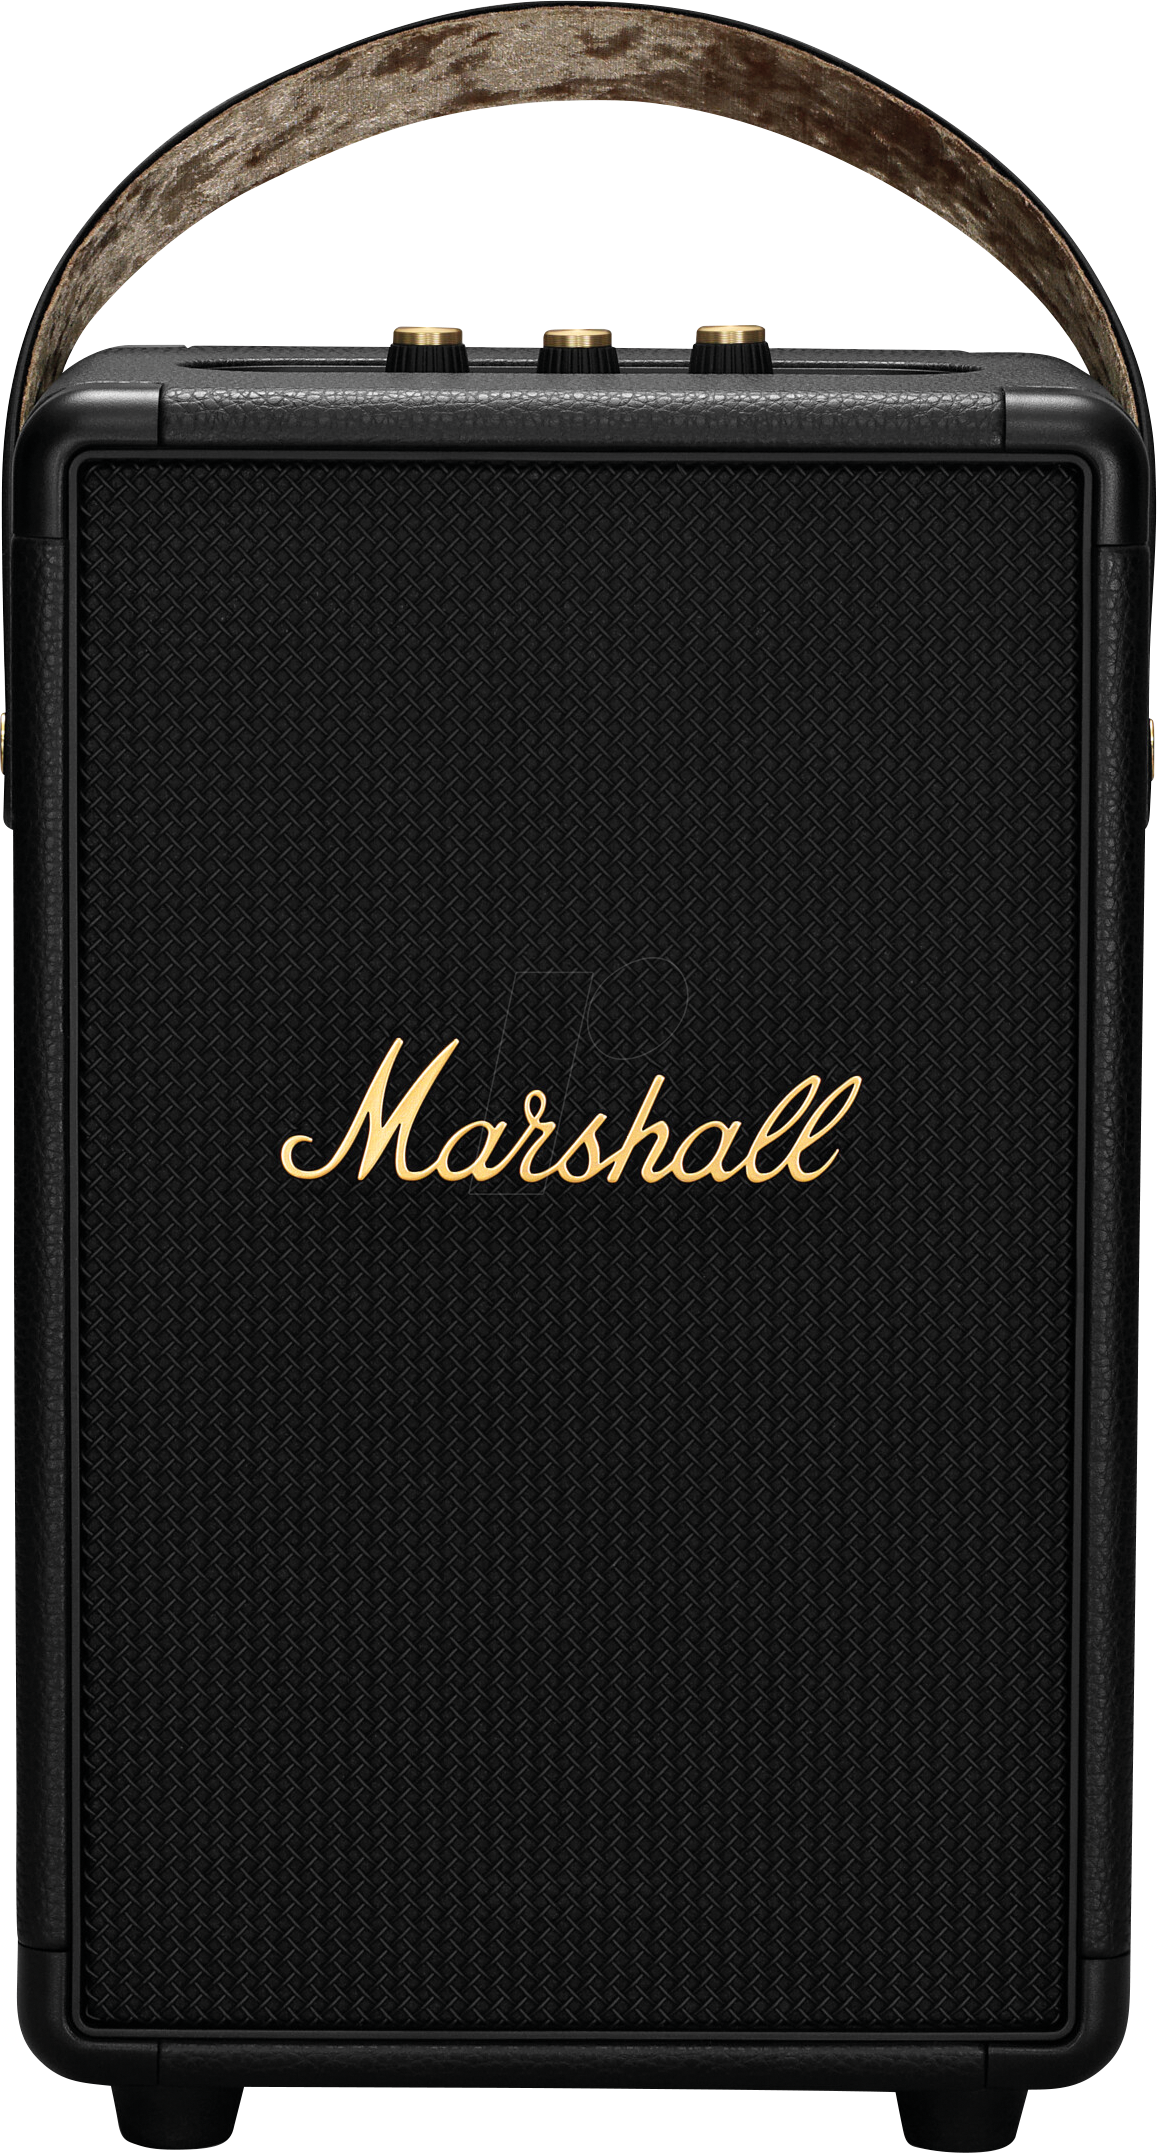 MARSHALL 1005924 - Lautsprecher, Bluetooth, portabel, Tufton von Marshall